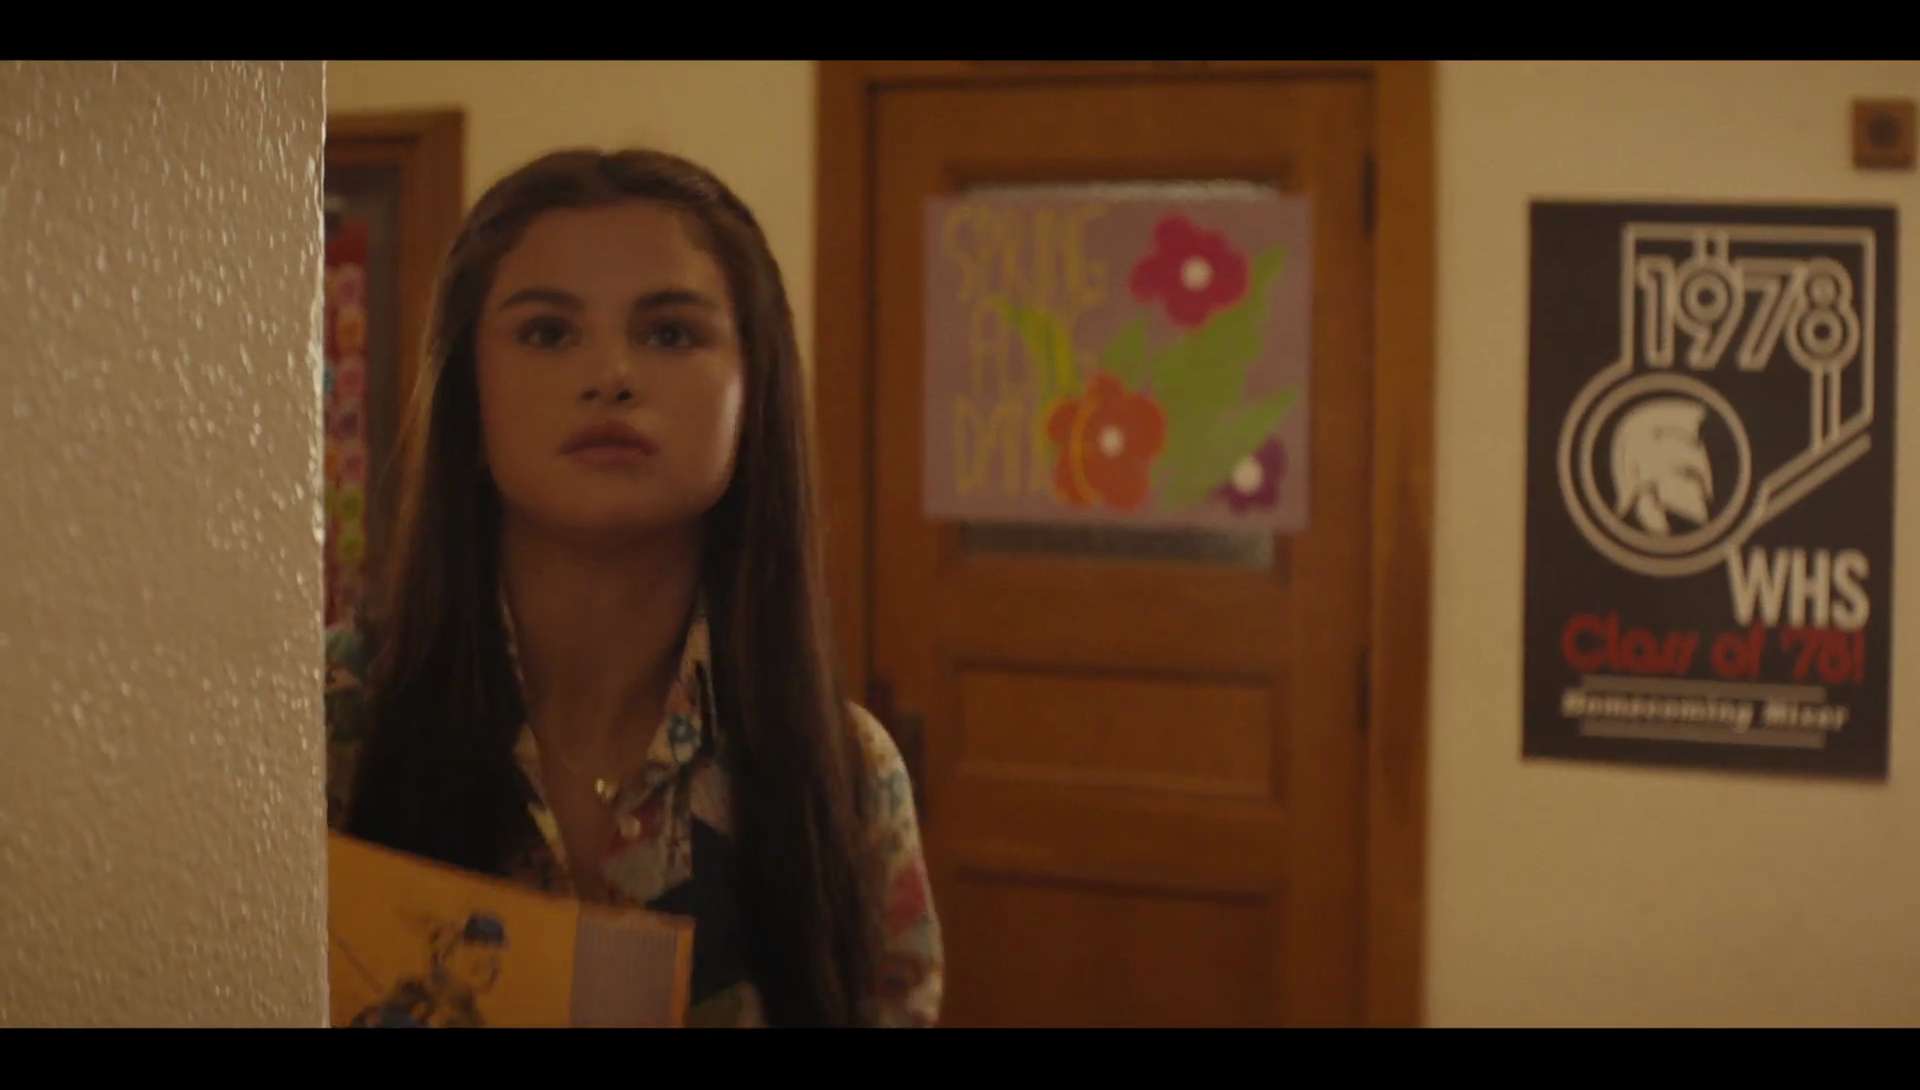 Selena_Gomez_-_Bad_Liar_MV_Screen_Captures-68.jpg